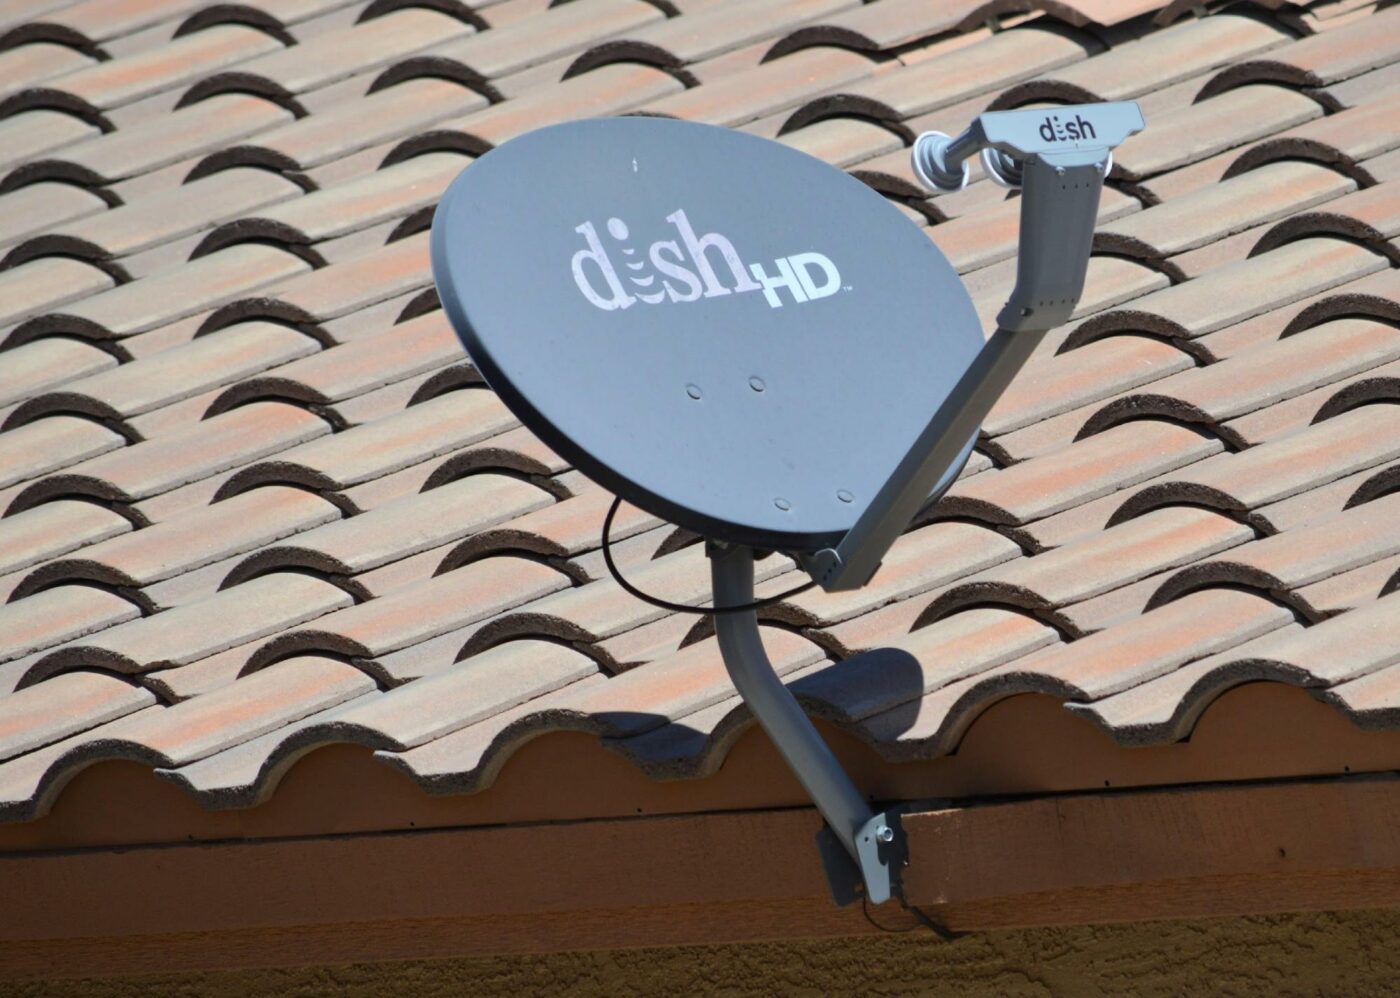 Colorado Dish Network Corp